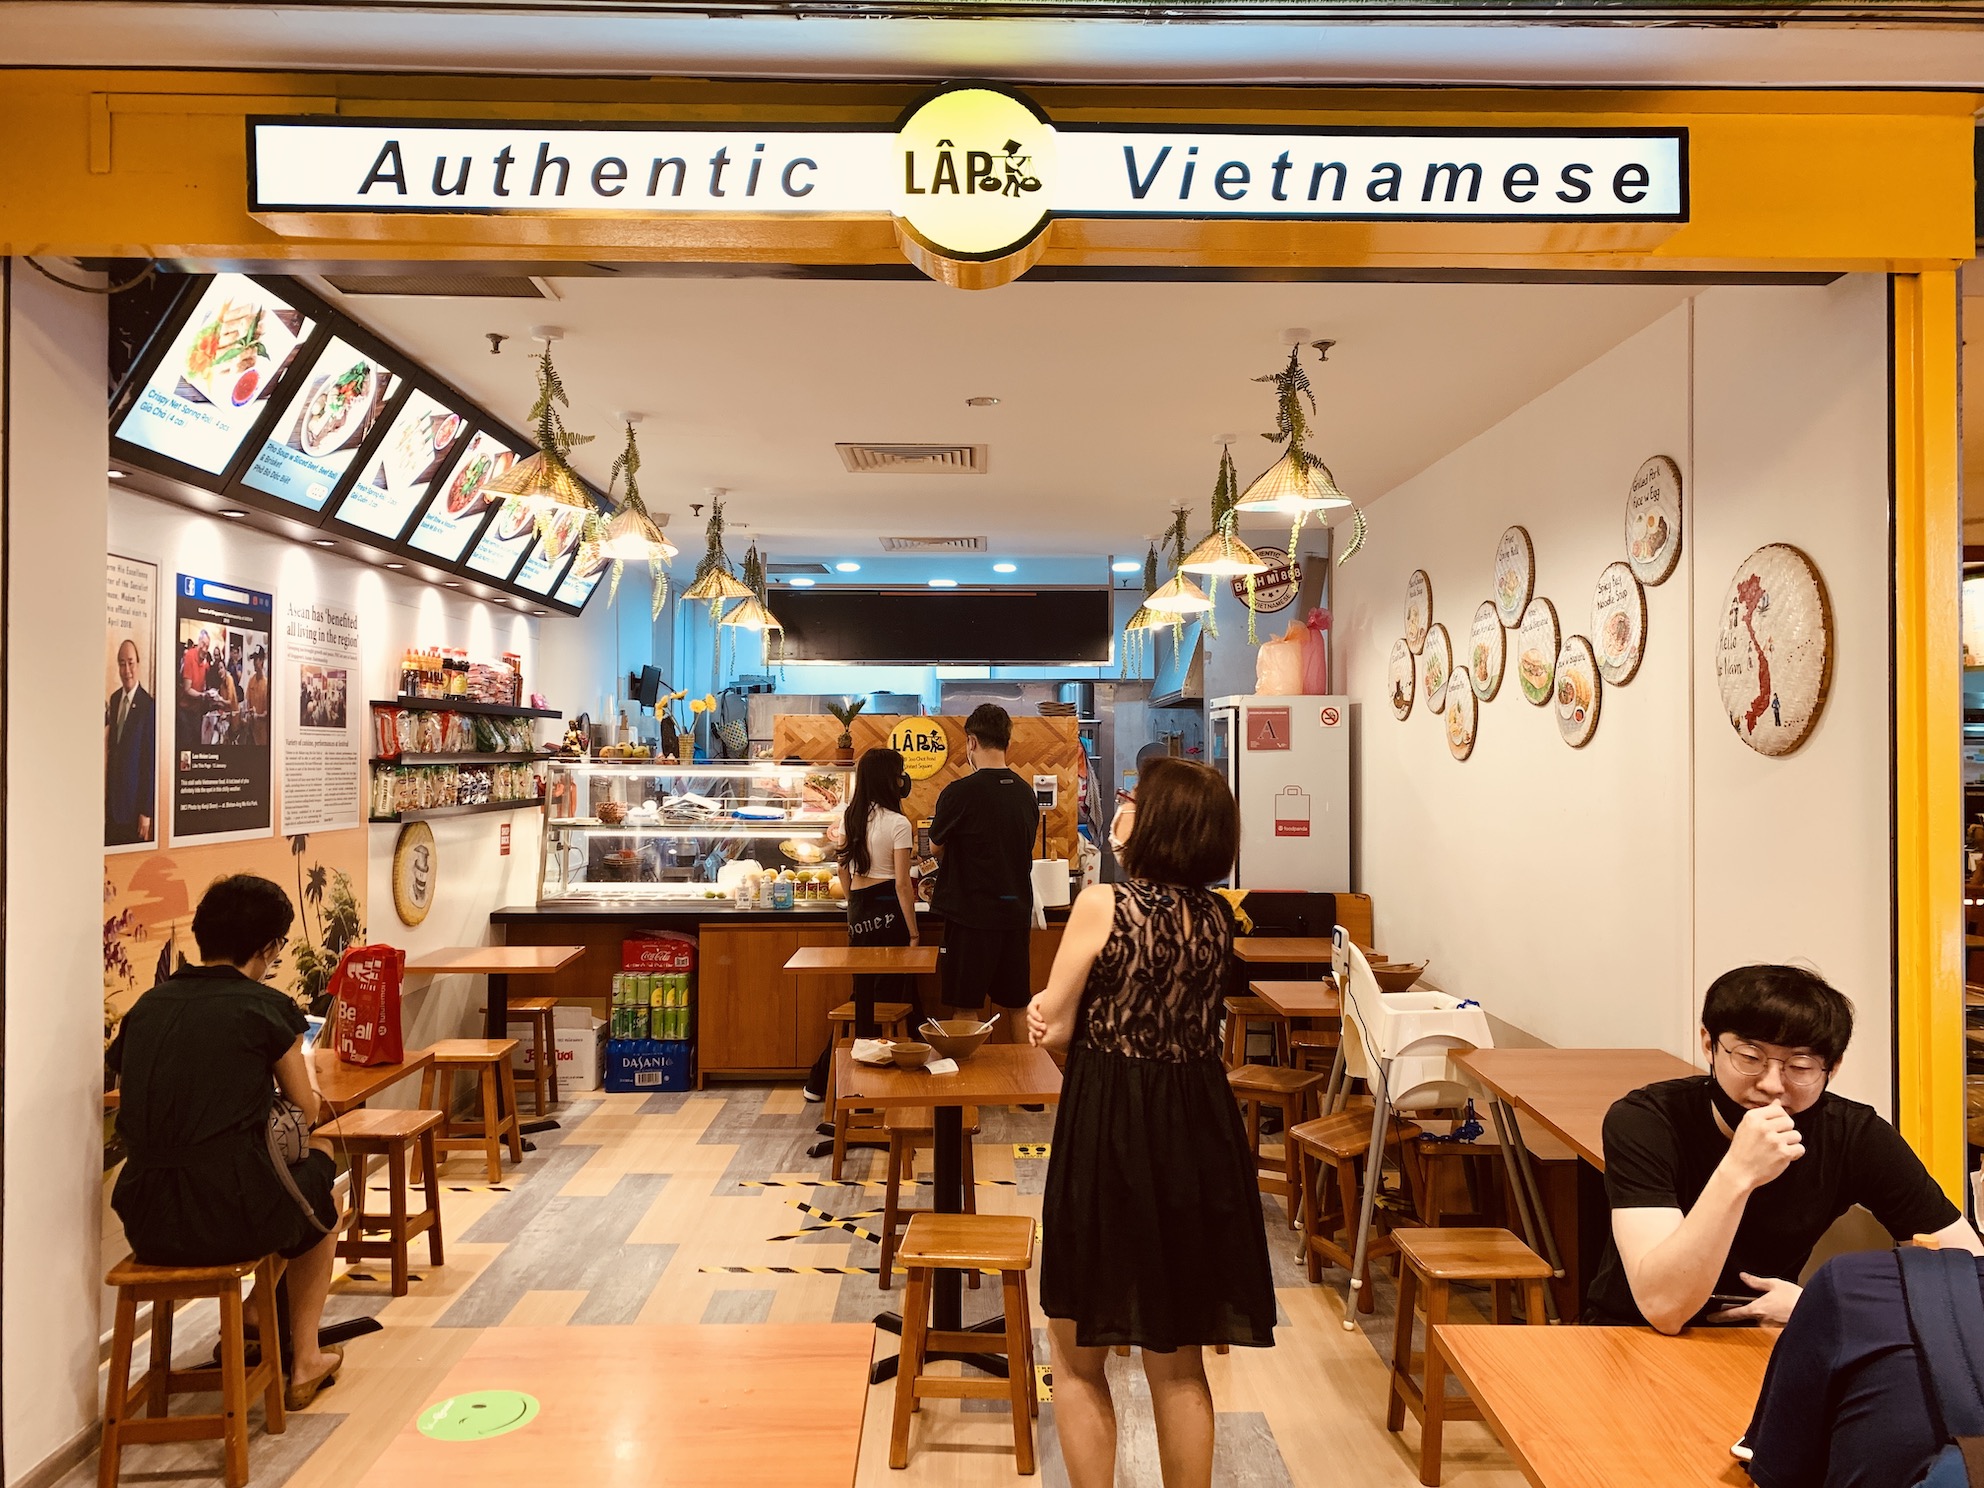 Lap Vietnamese Restaurant - Restaurant Front